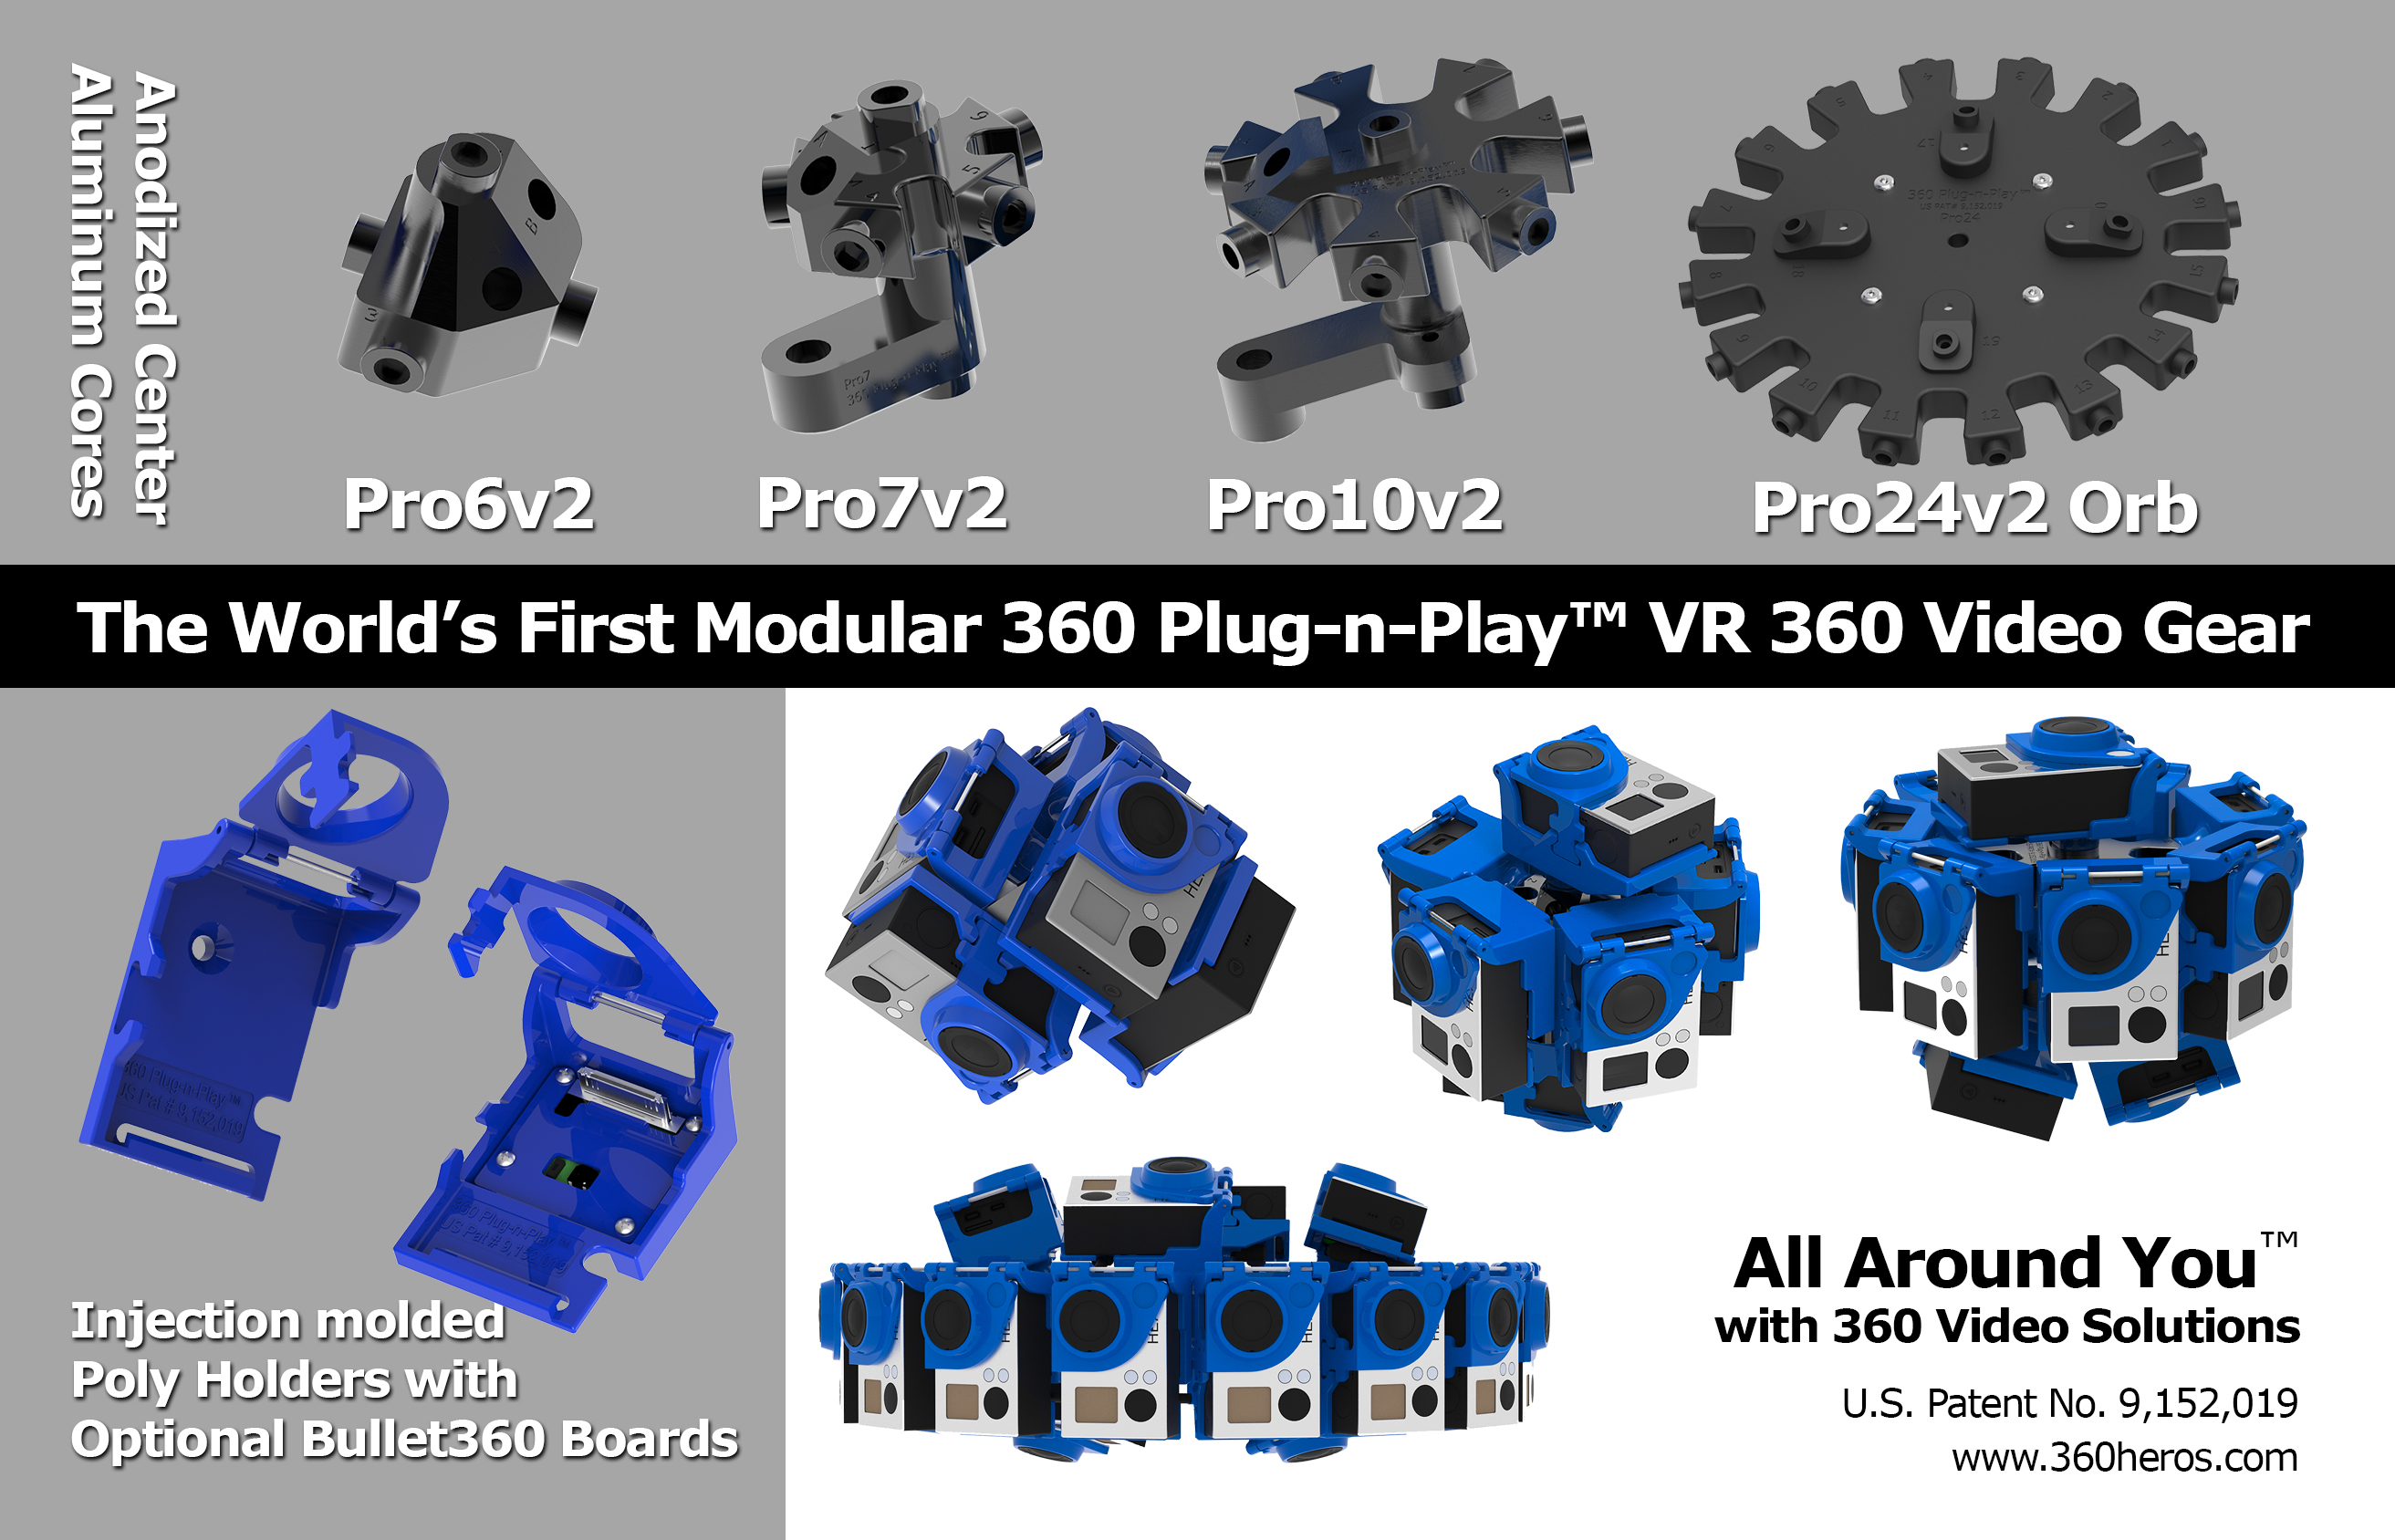 New Modular 360 Plug-n-Play Designs